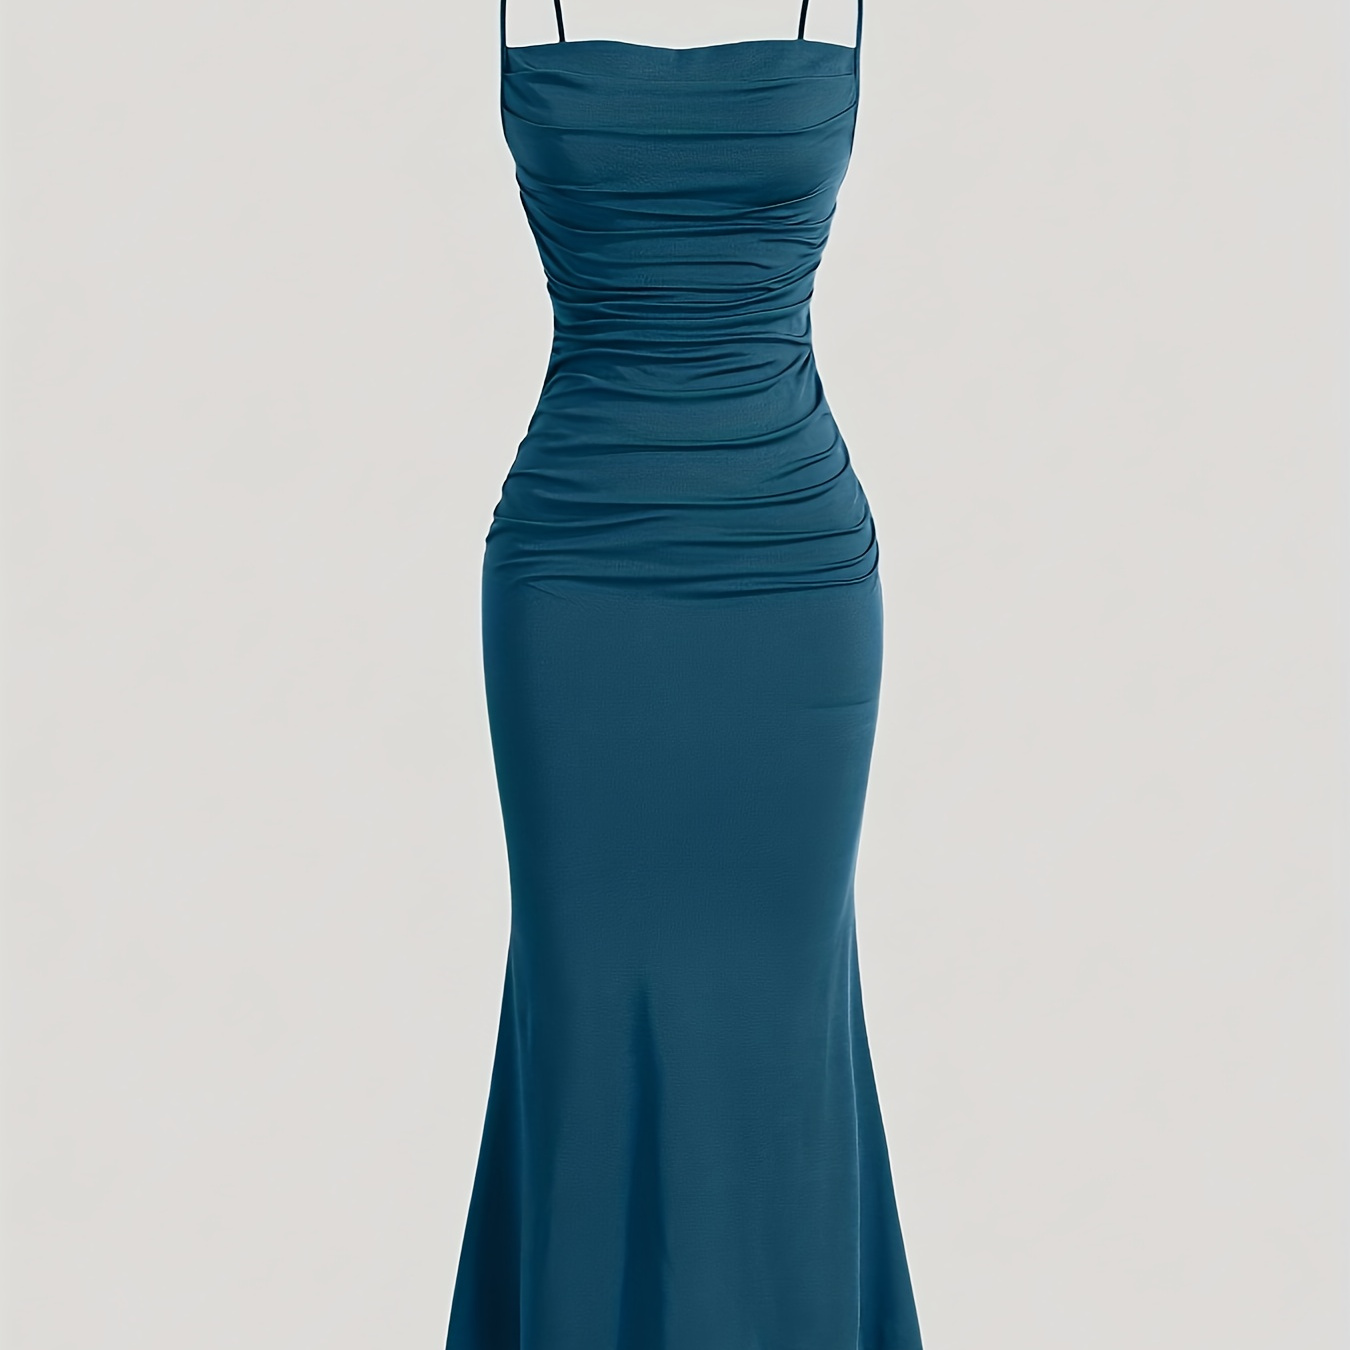 

Ruched Spaghetti Strap Dress, Elegant Sleeveless Cami Dress For Spring & Summer, Women's Clothing